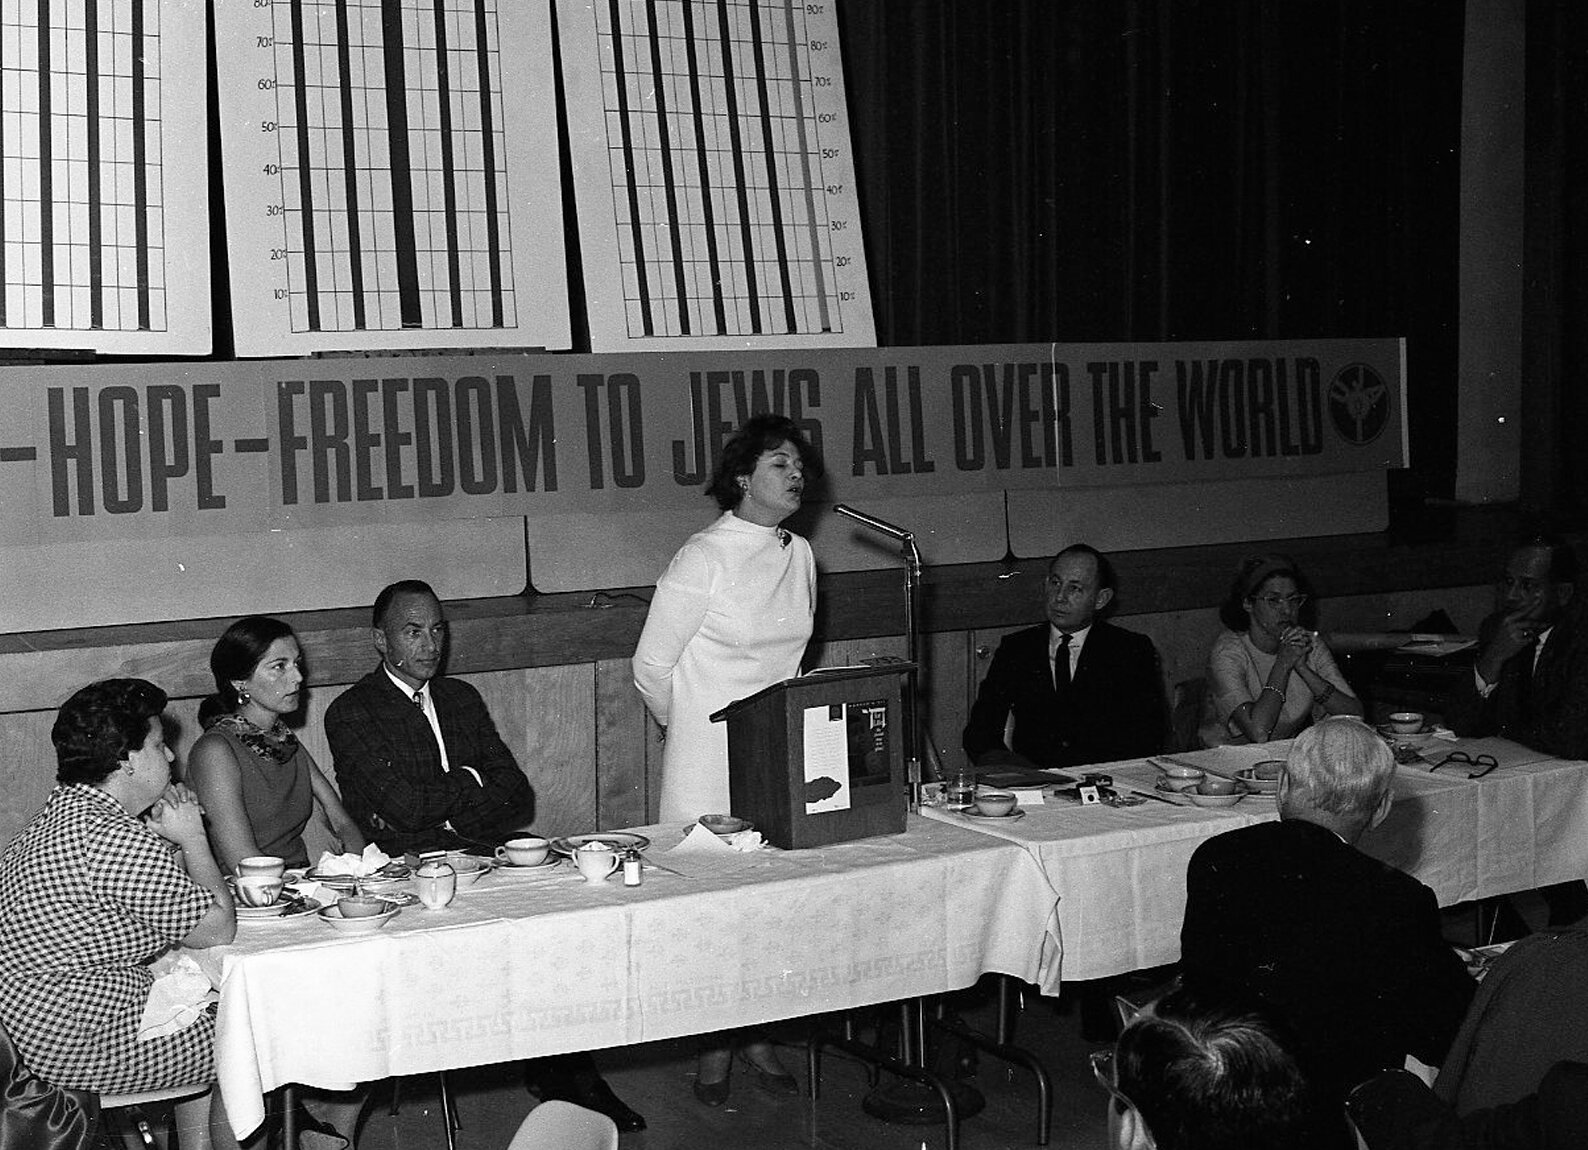 UJA Breakfast at the Jewish Community Center on January 29, 1967